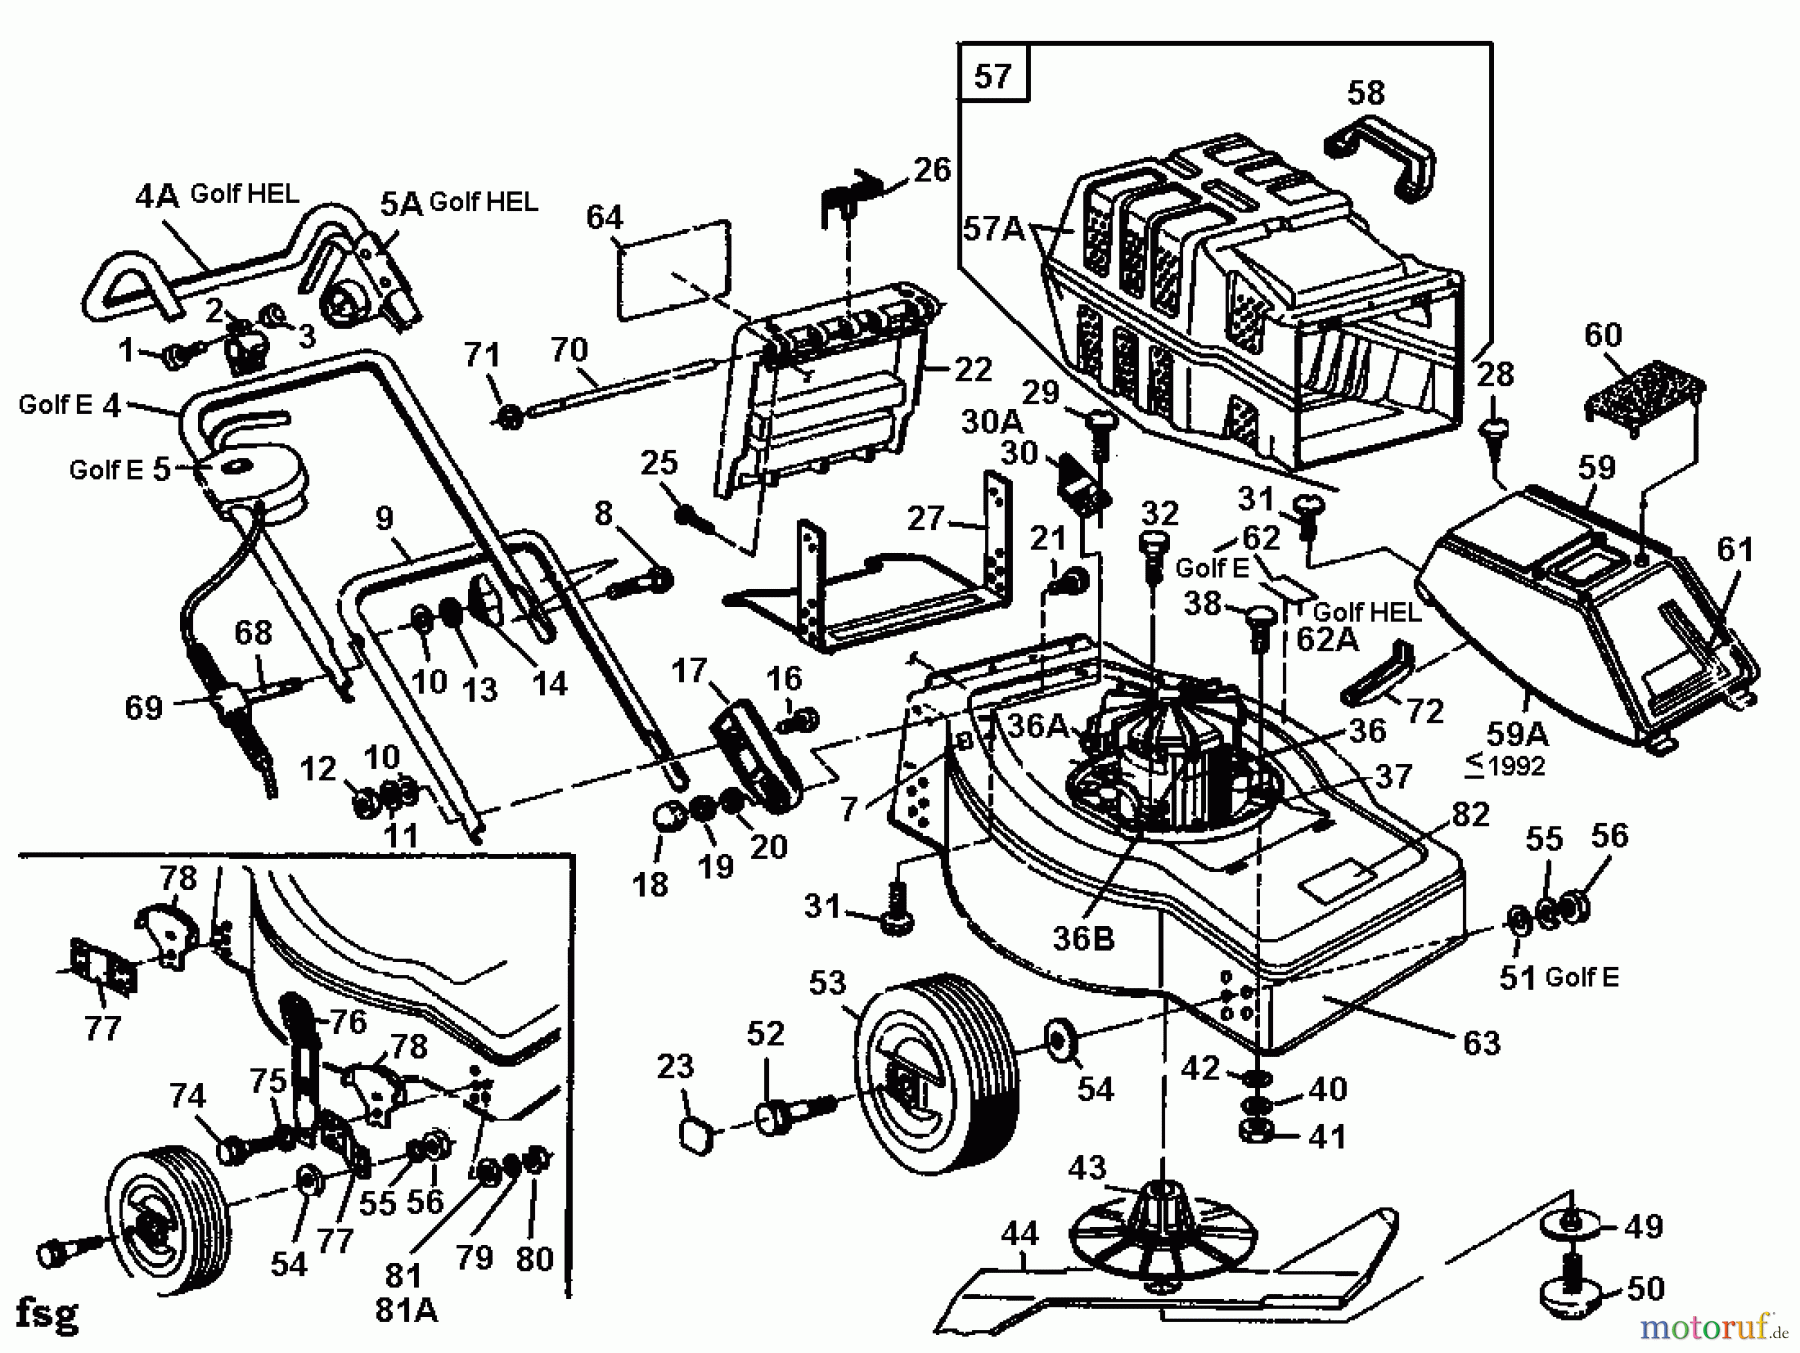  Golf Electric mower E 02881.06  (1994) Basic machine